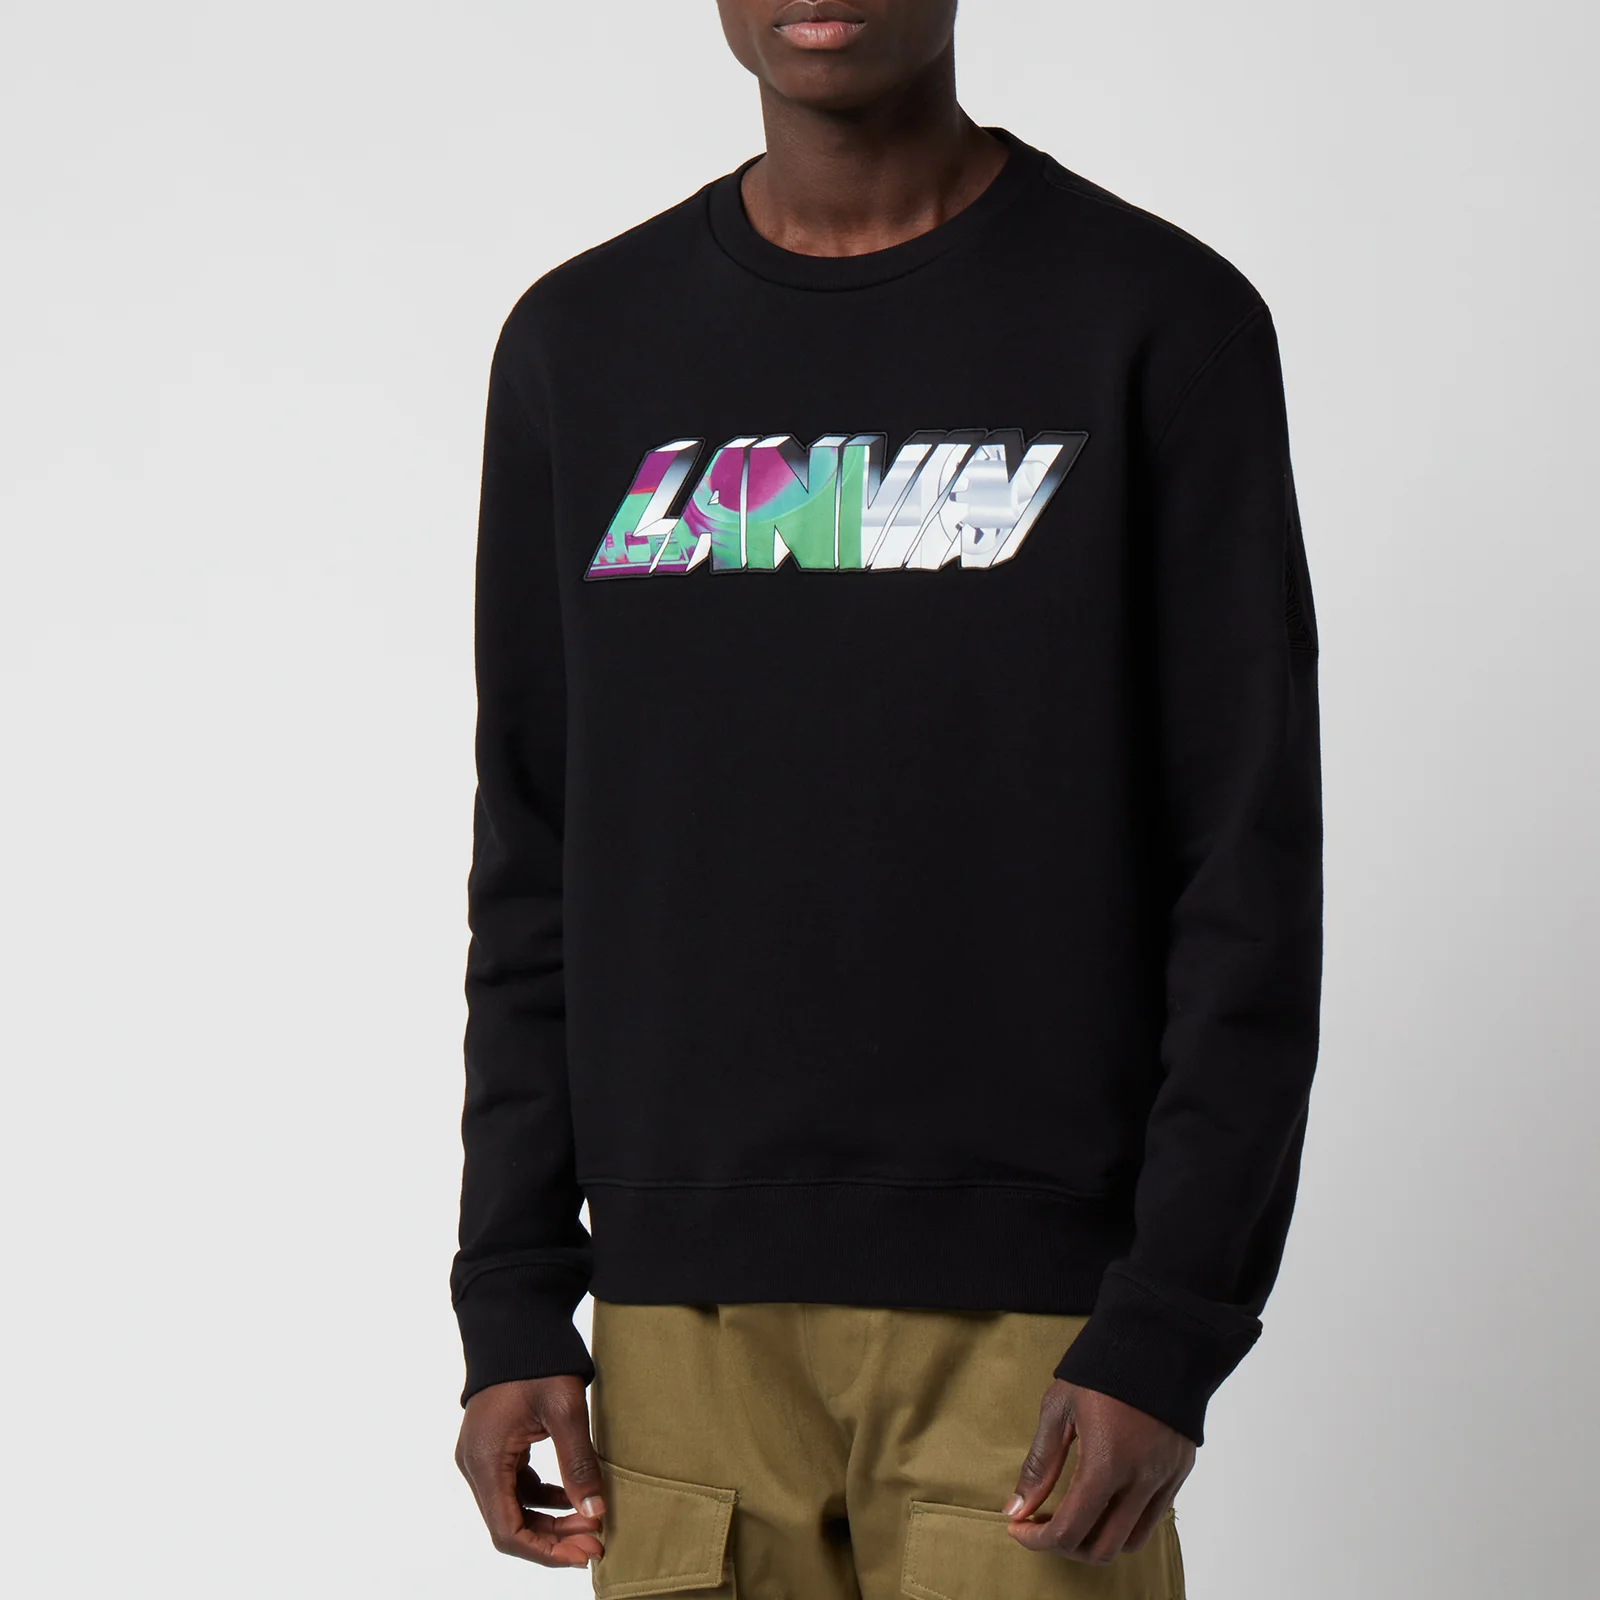 Lanvin Men's Rosenquist Sweatshirt - Black Image 1